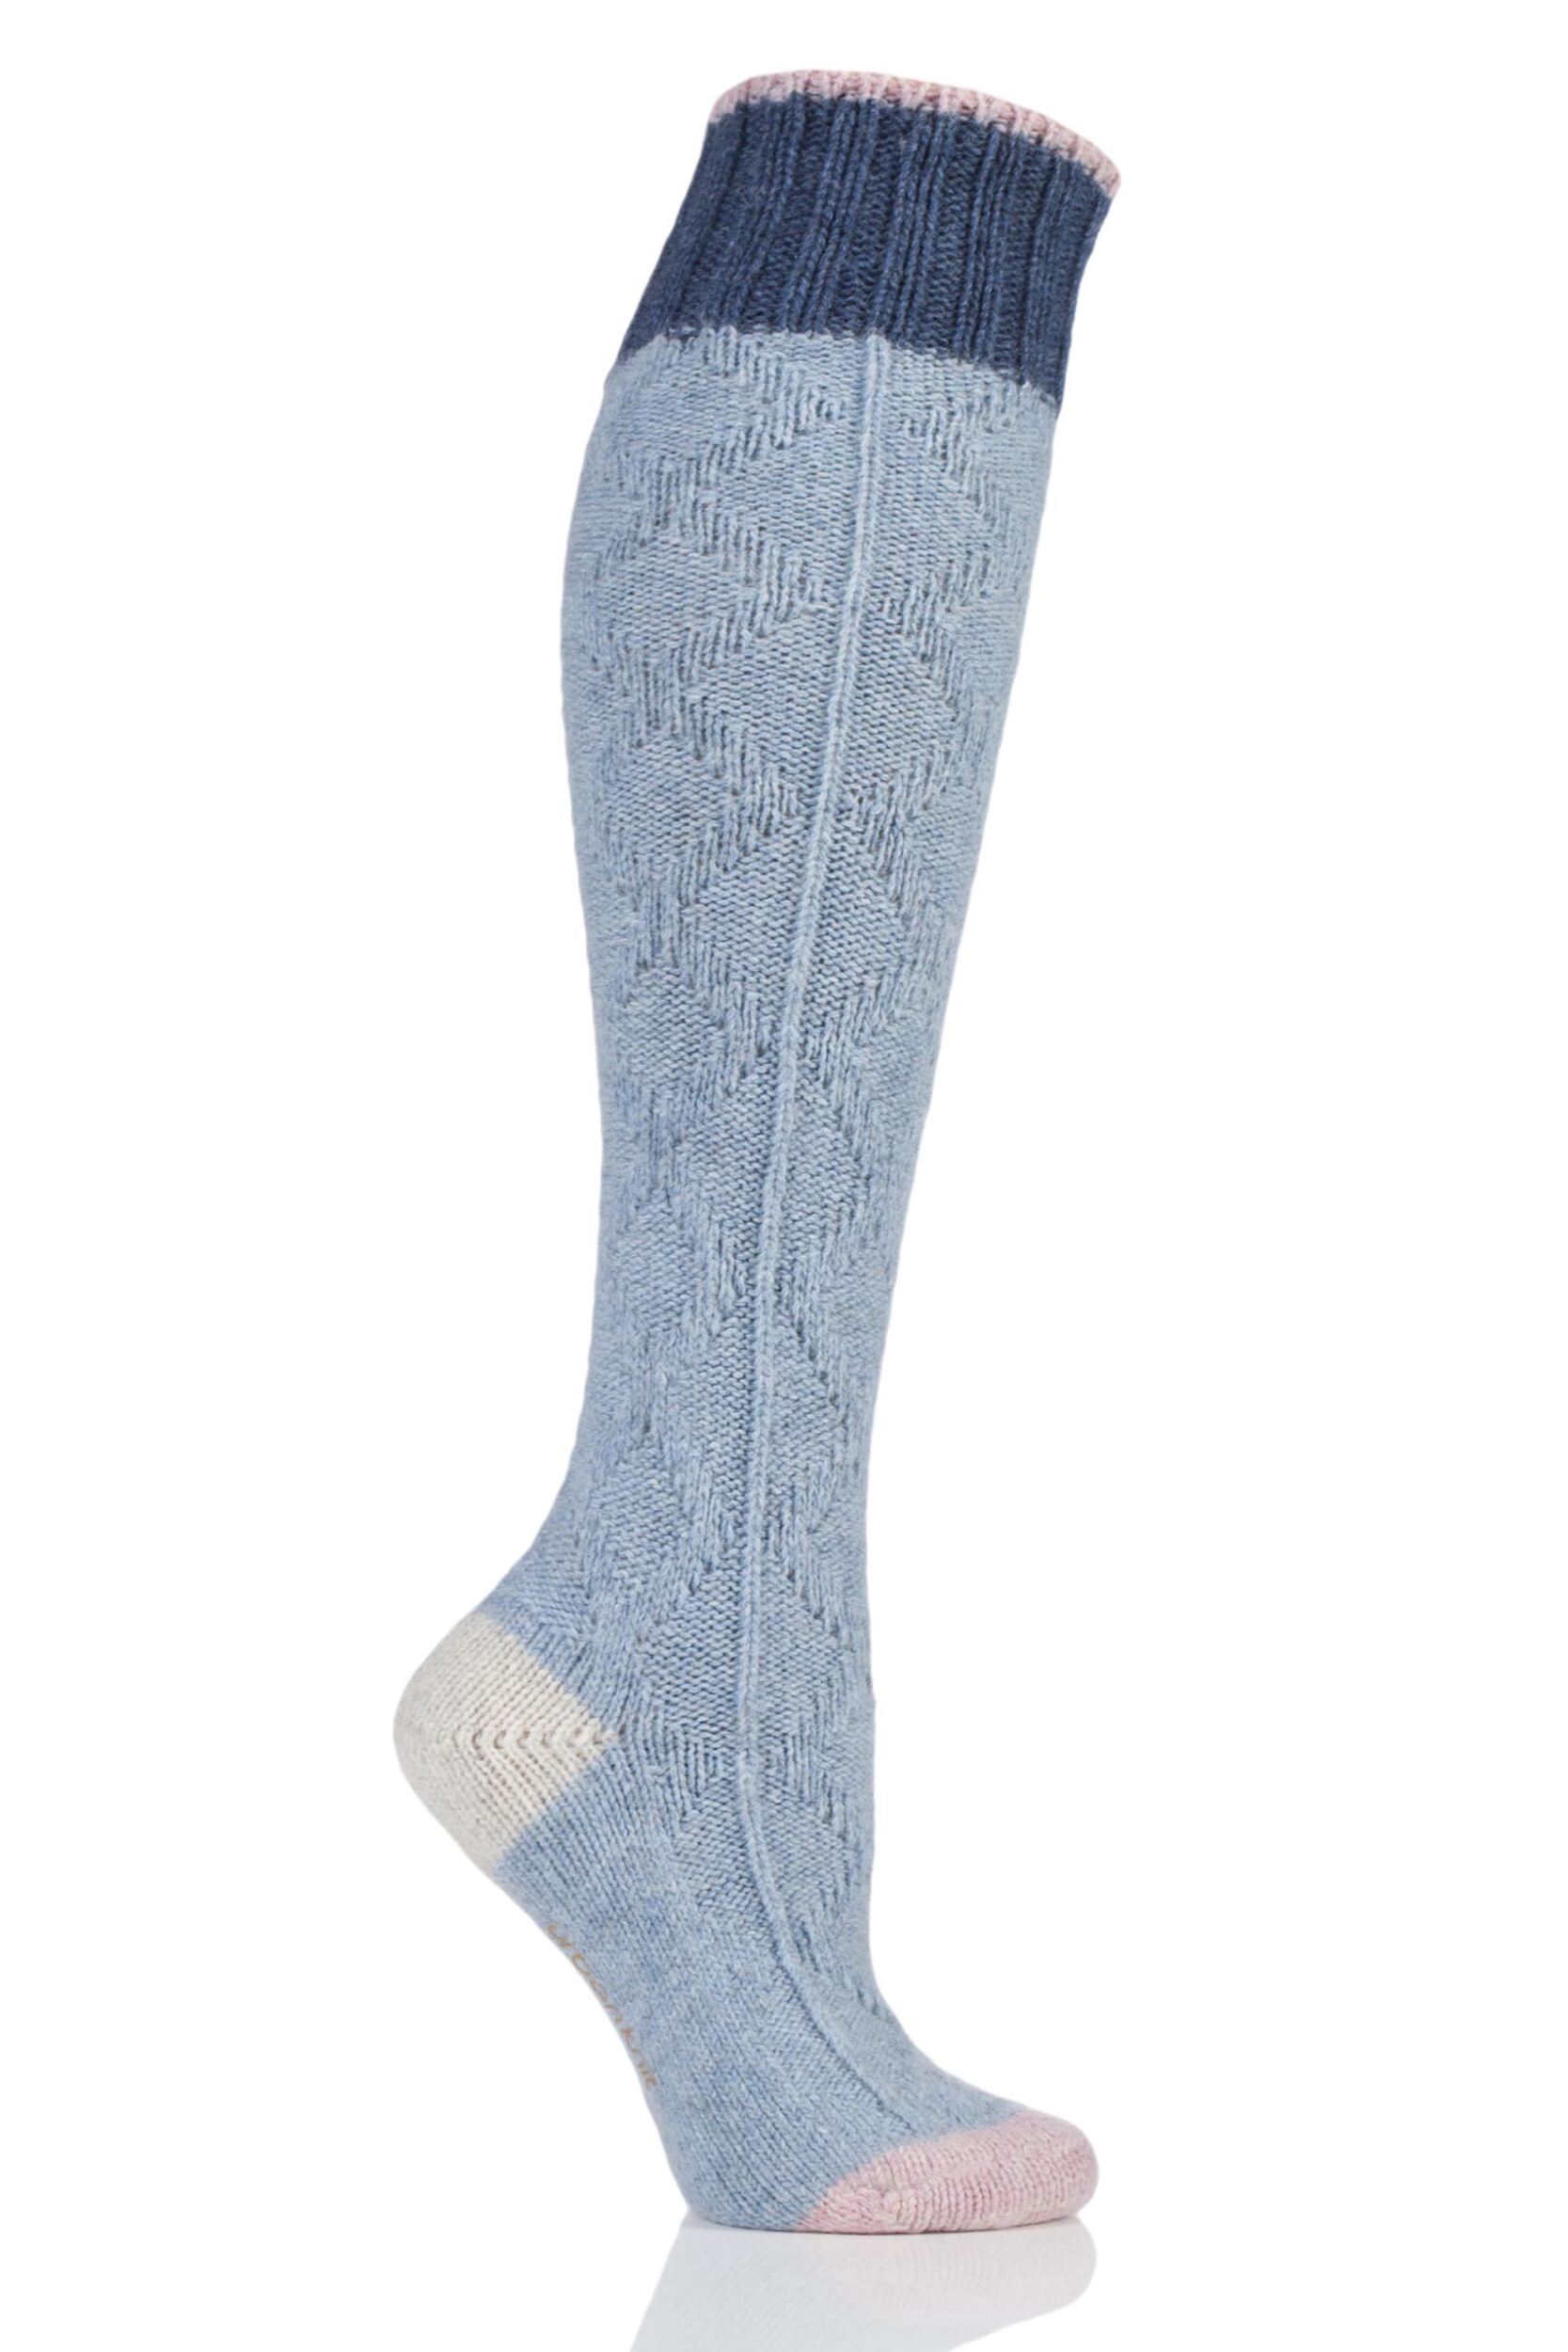 Ladies 1 Pair Urban Knit Cable Knit Knee High Wool Boot Socks | eBay